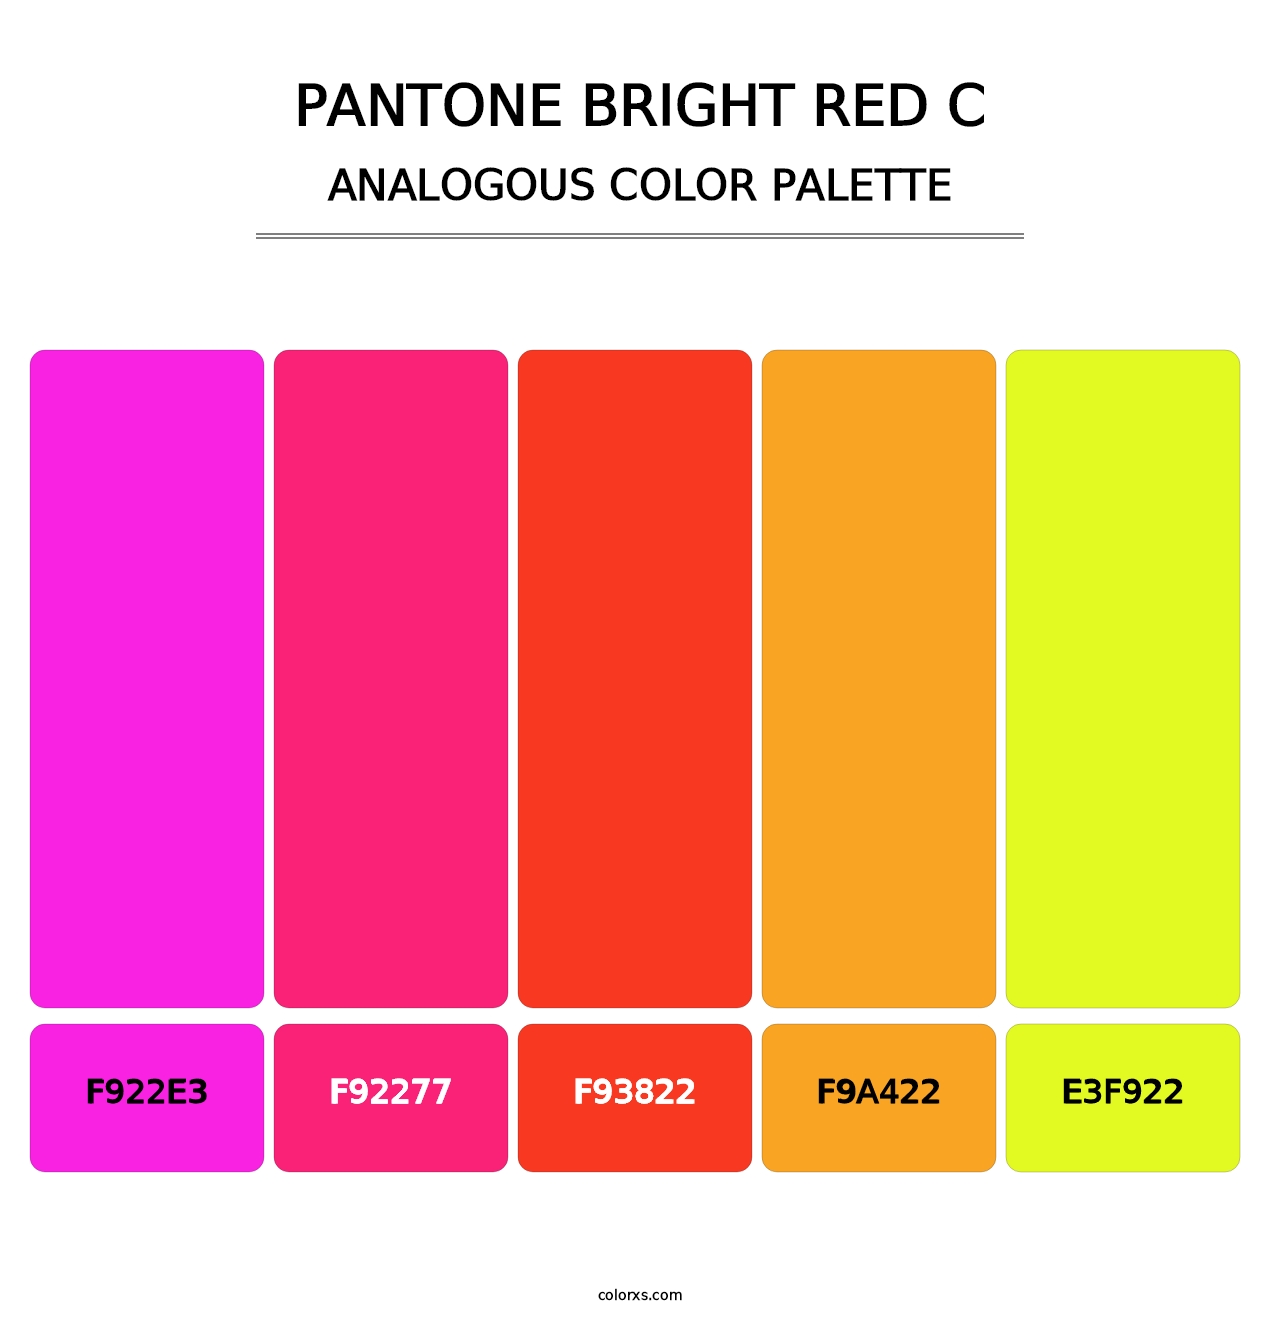 PANTONE Bright Red C - Analogous Color Palette